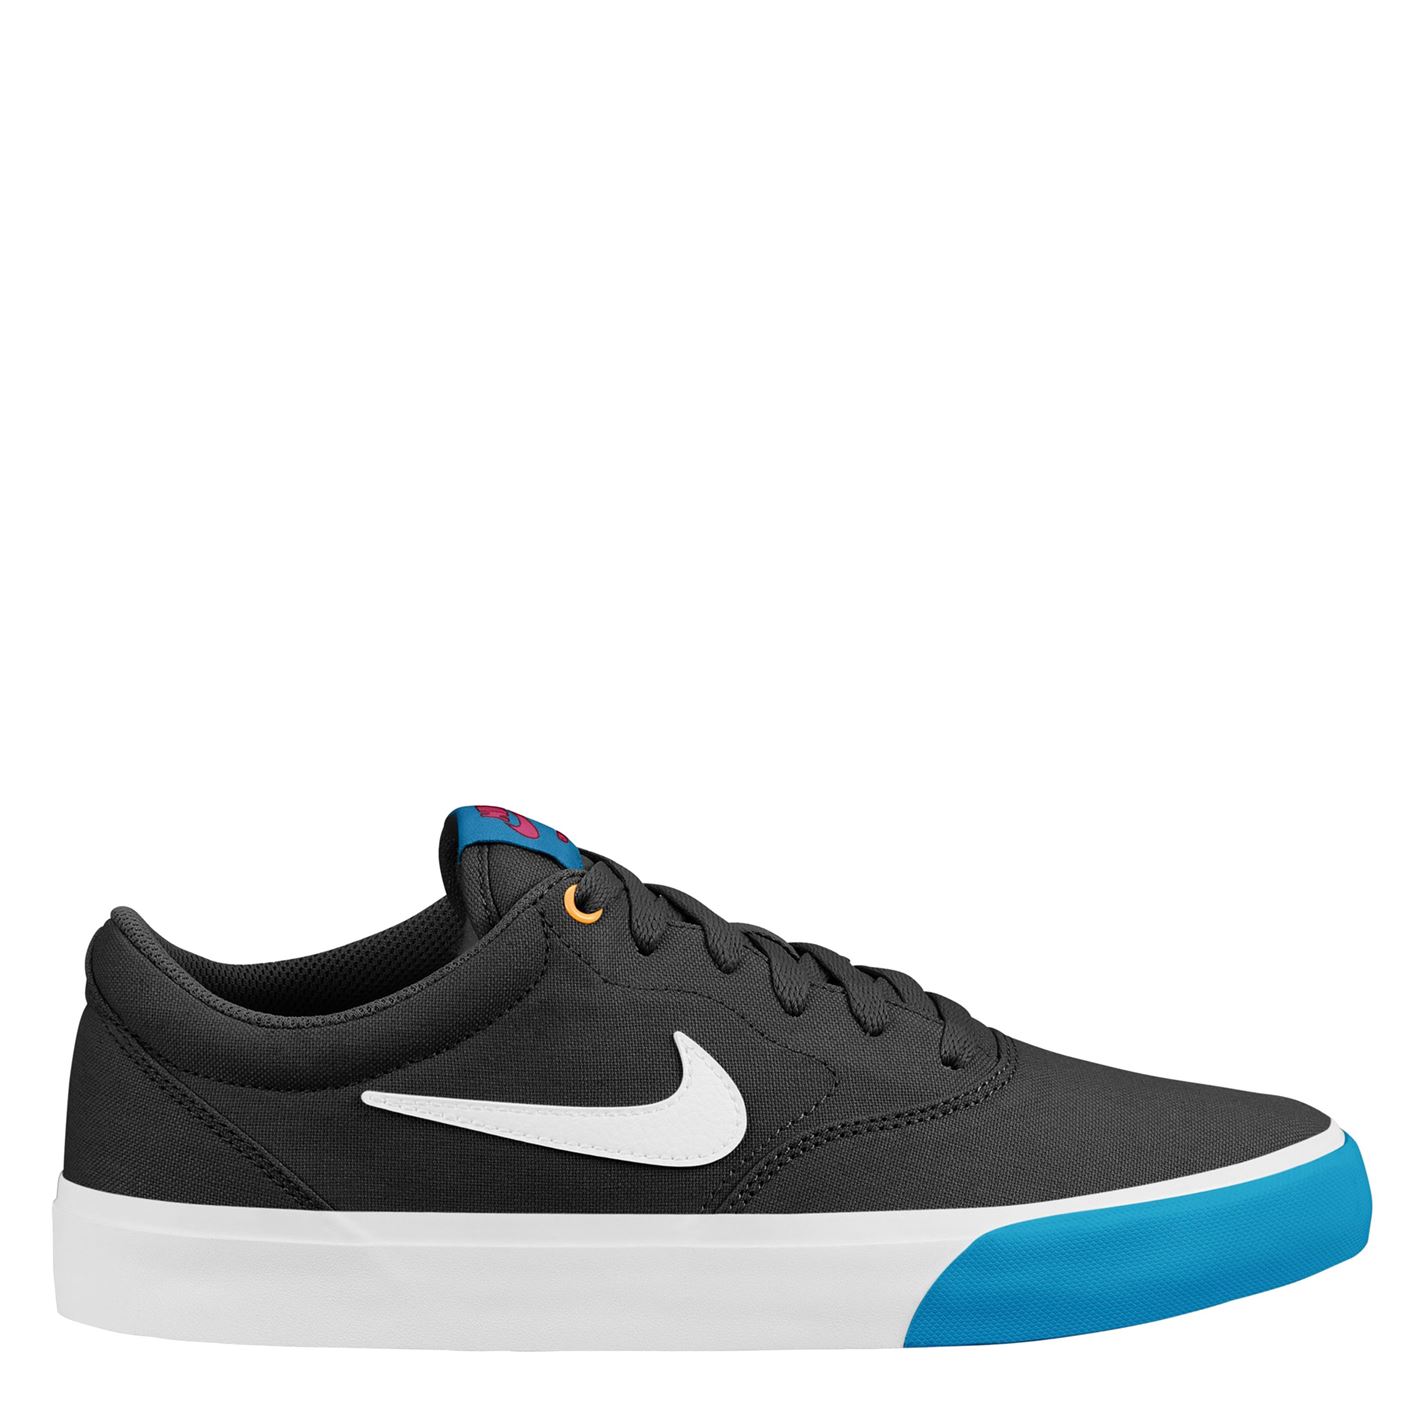 Nike SB Charge Premium Skate Shoe negru alb albastru